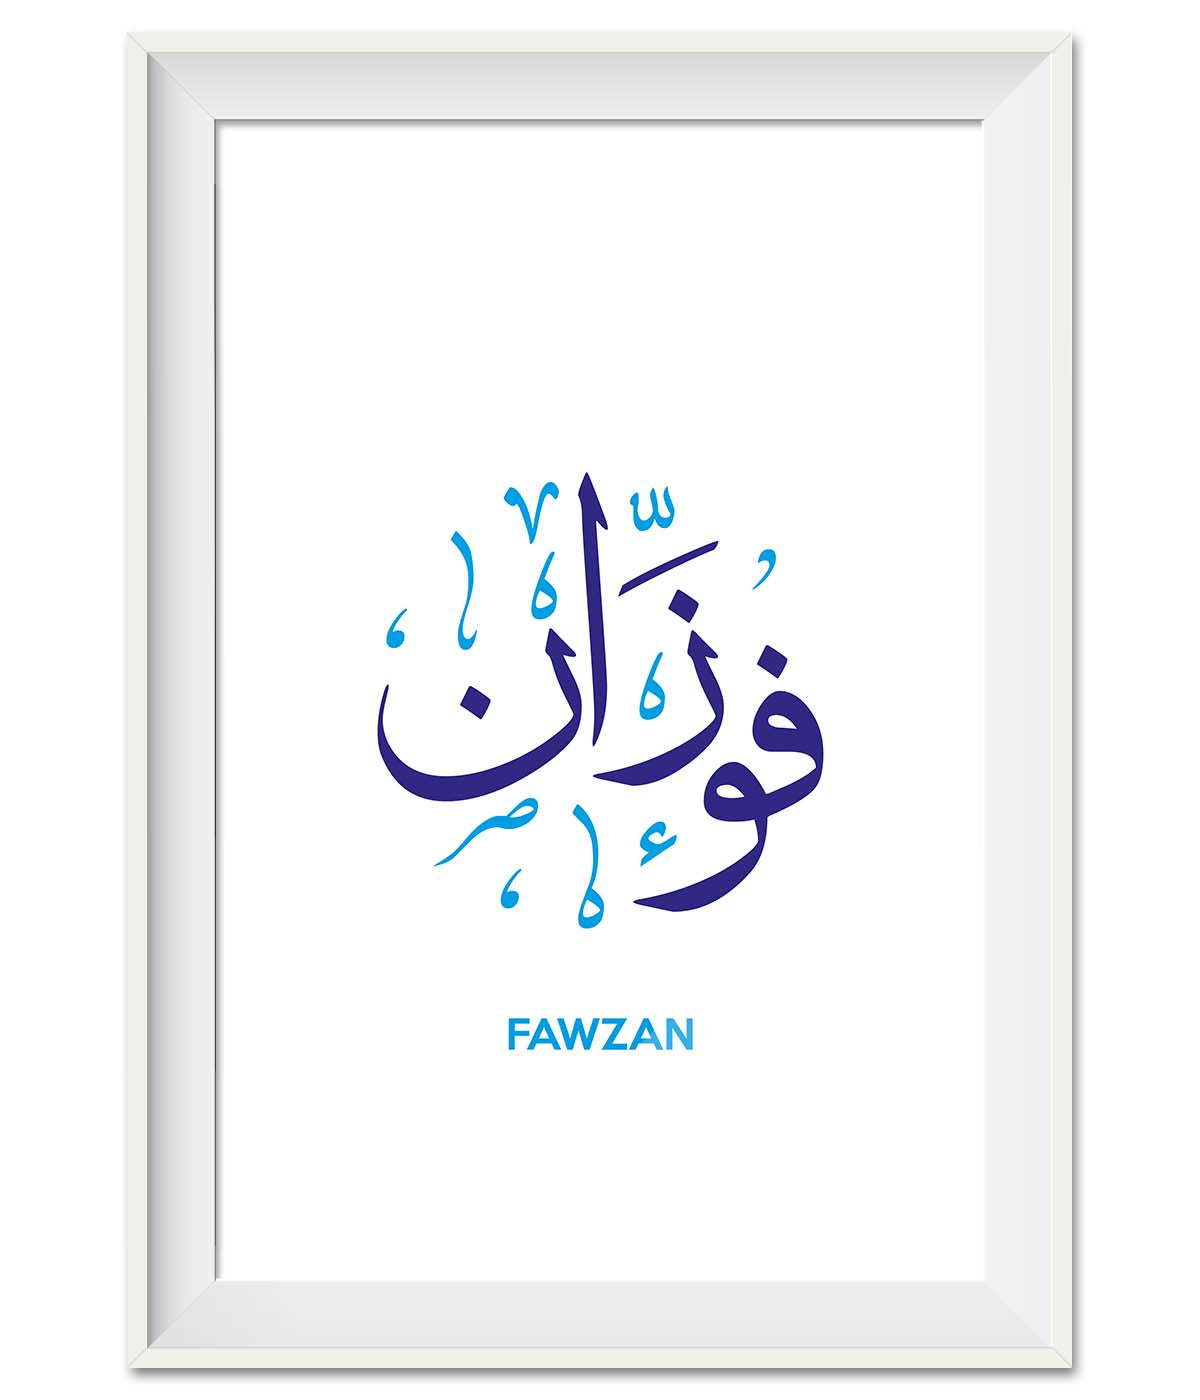 Fawzan